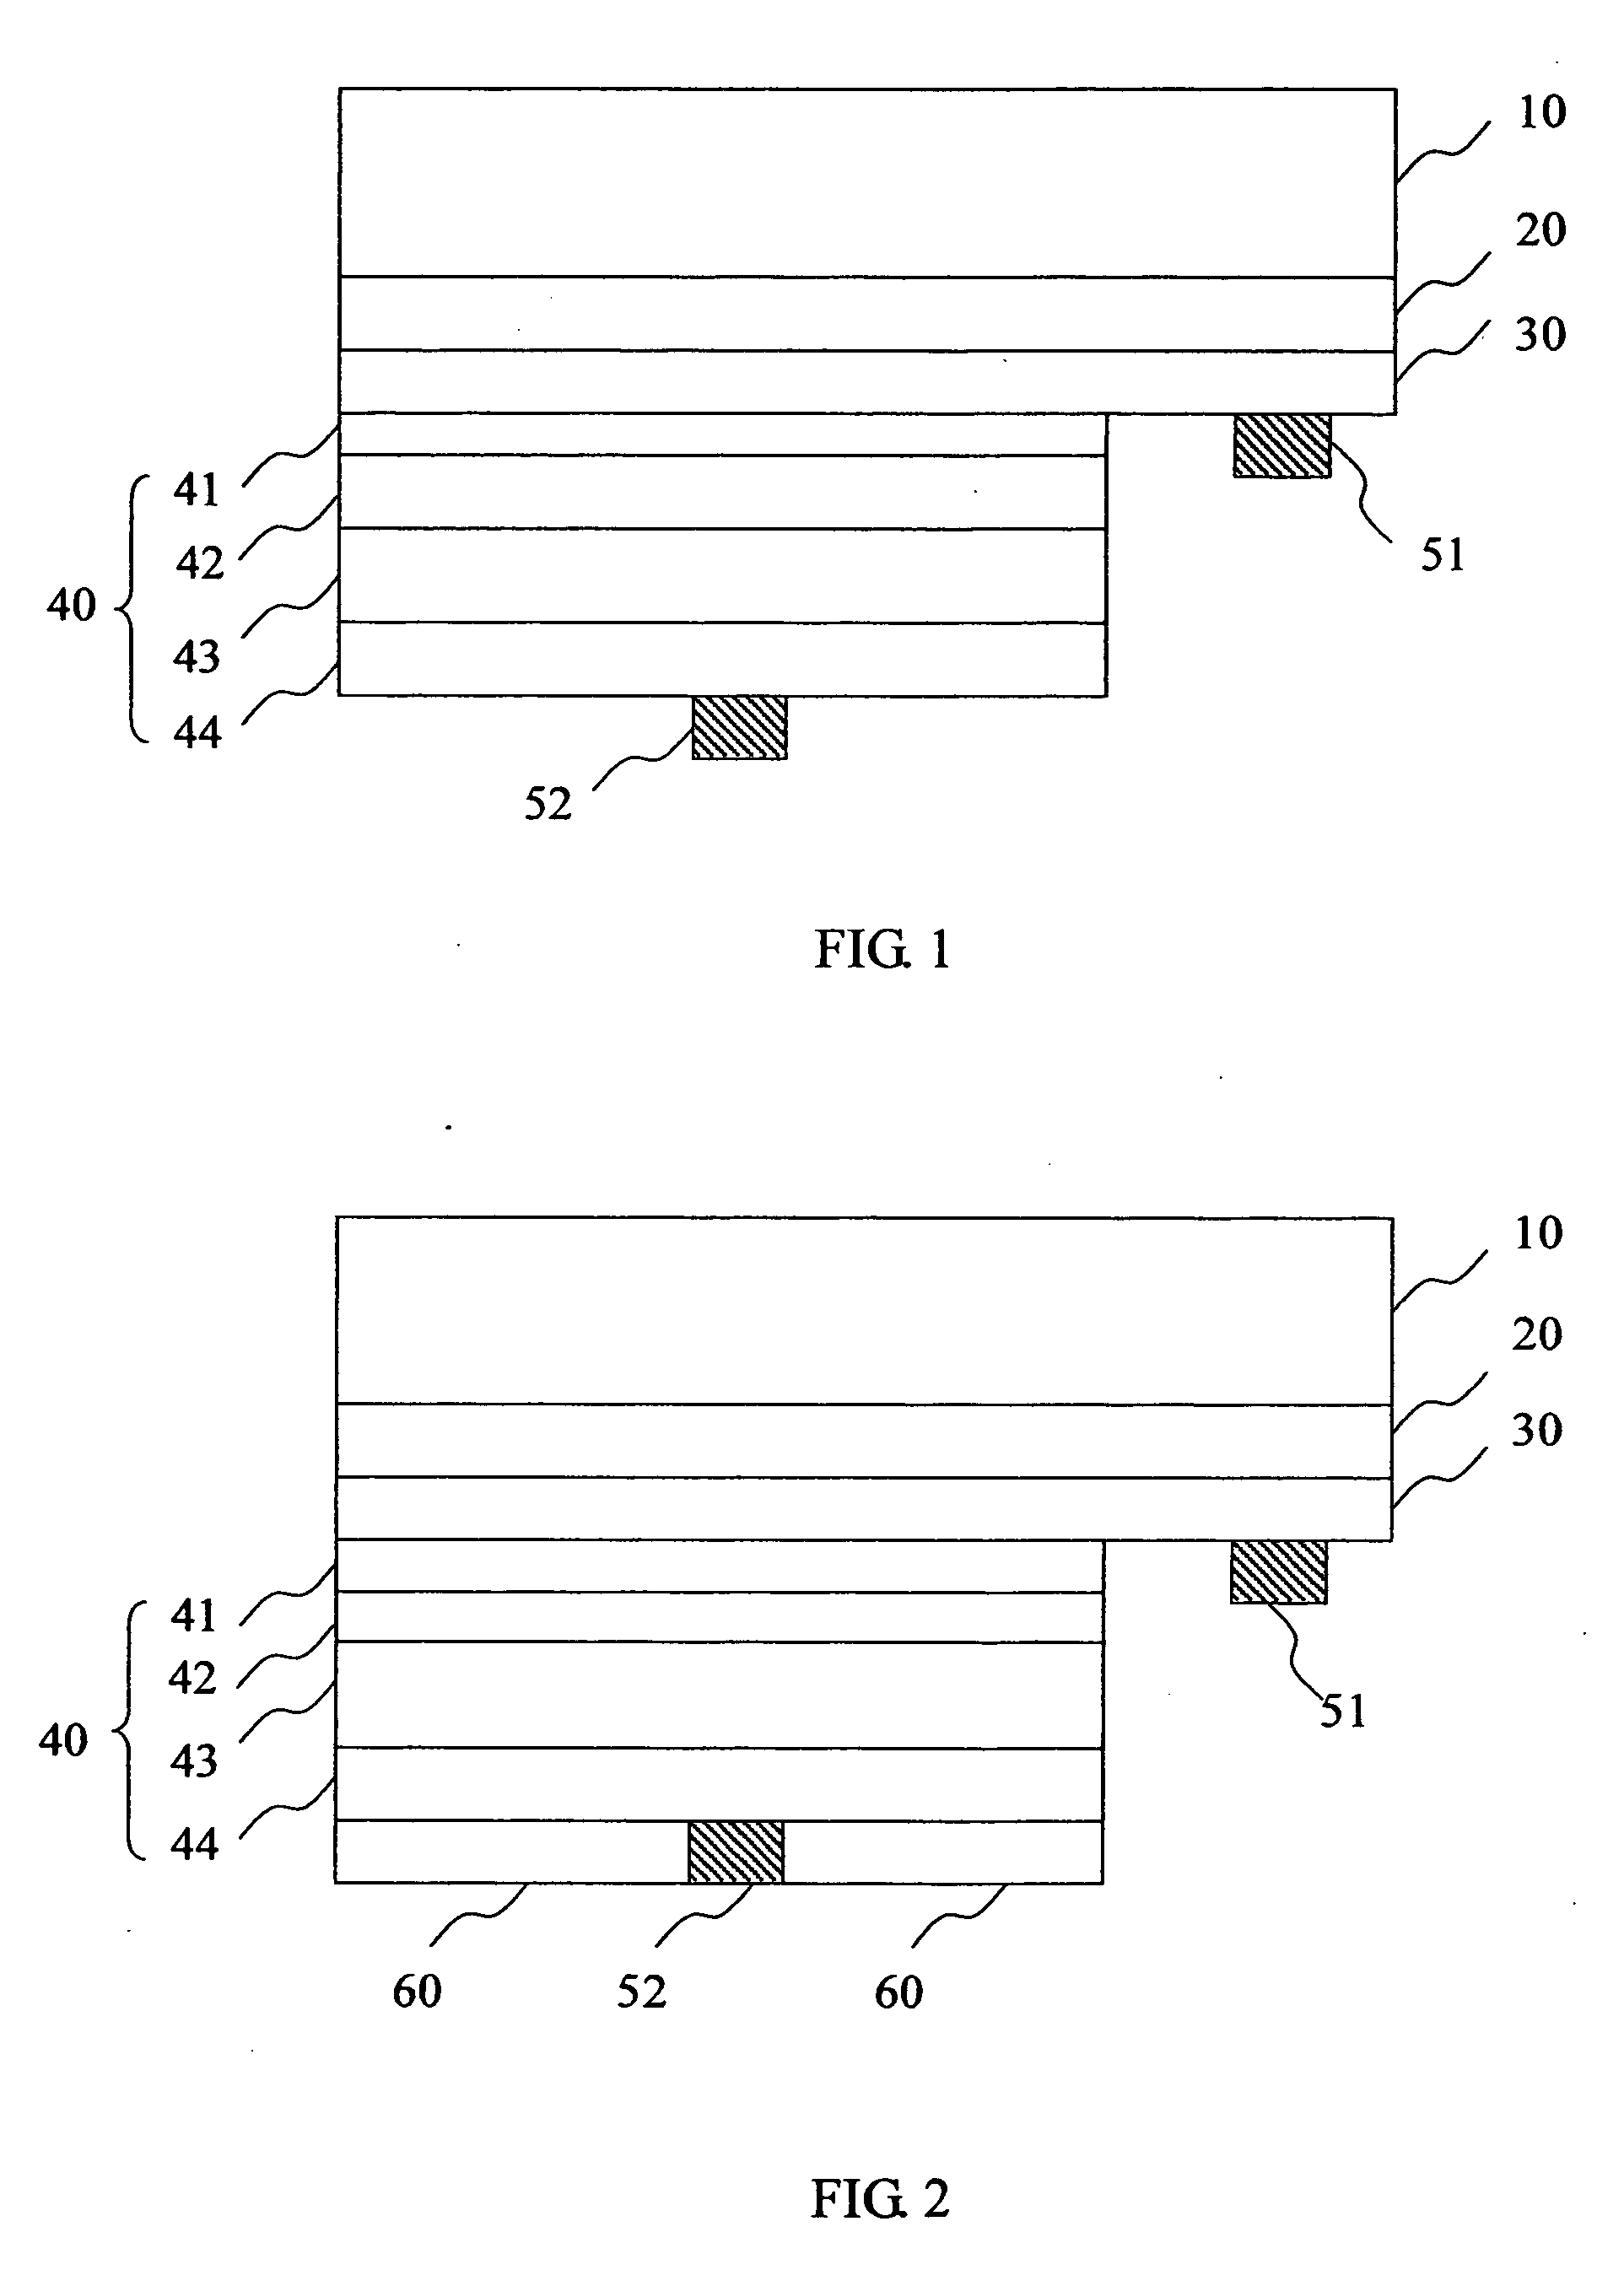 Method for producing light emitting diode